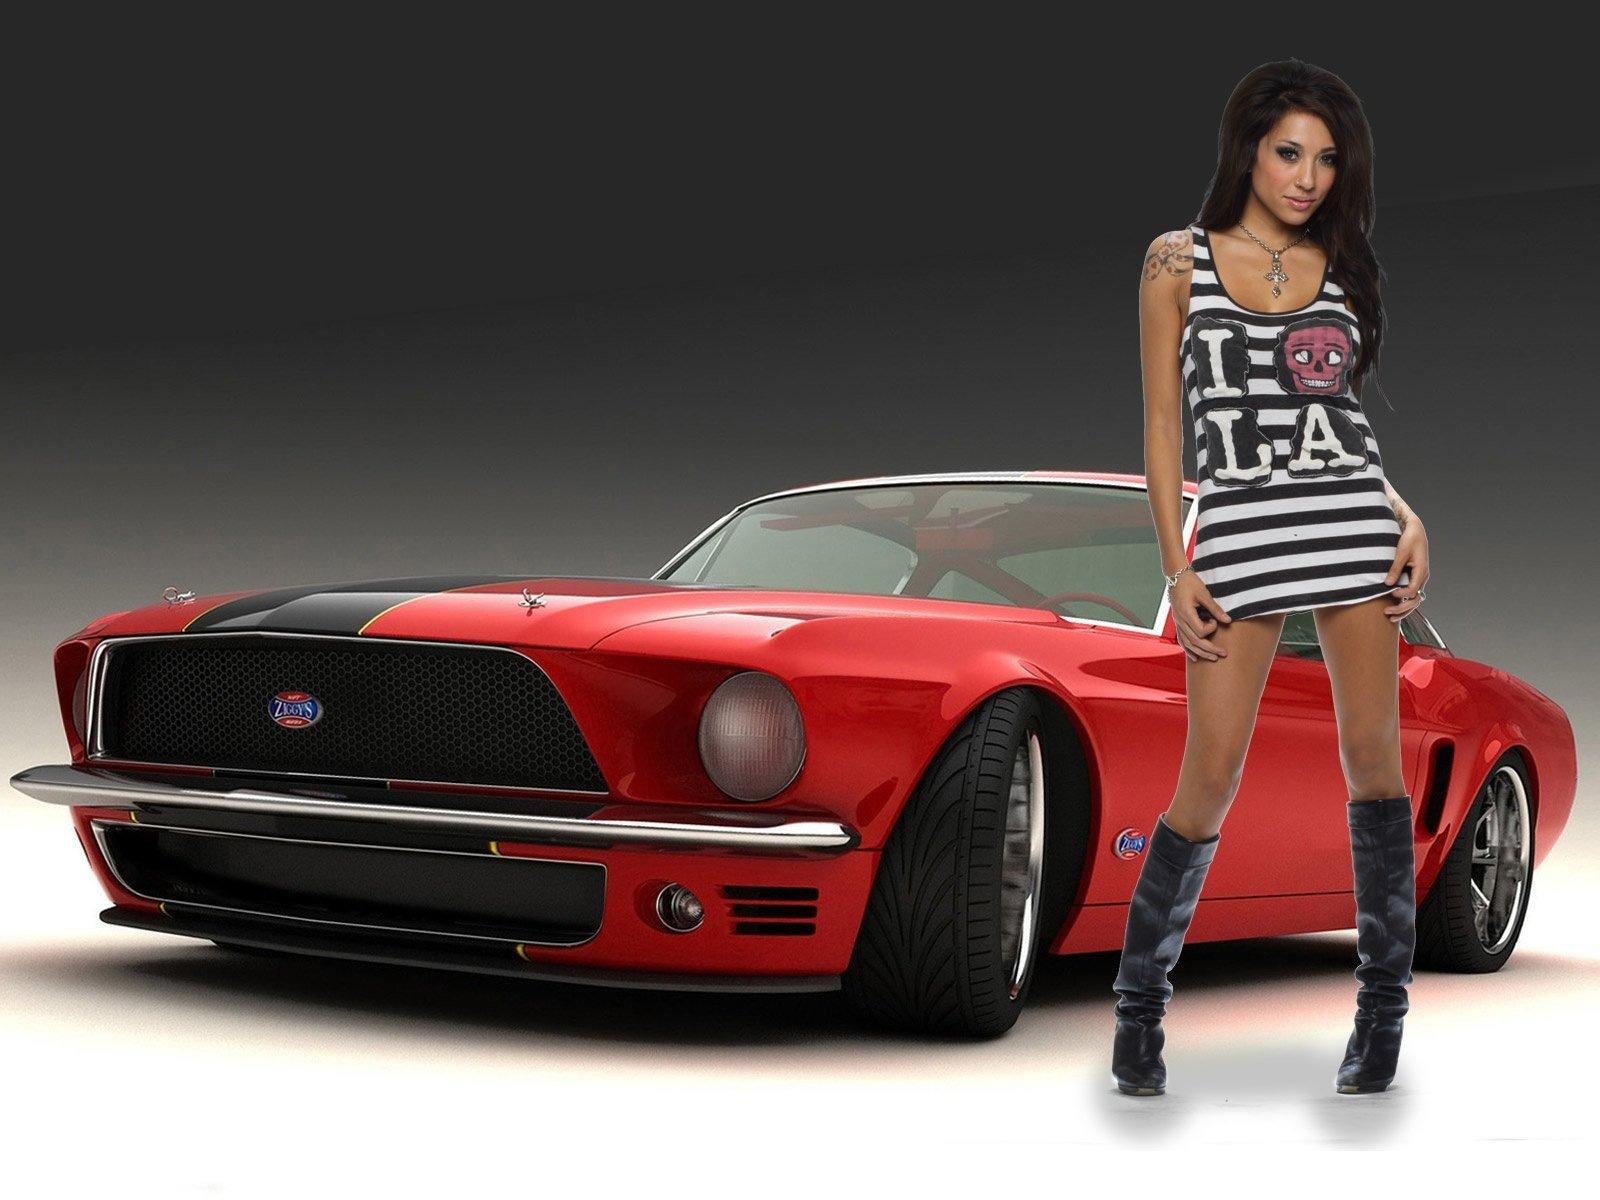  Download HQ mustang Girls Cars Wallpaper Num 122 1600 x 1200 1600x1200